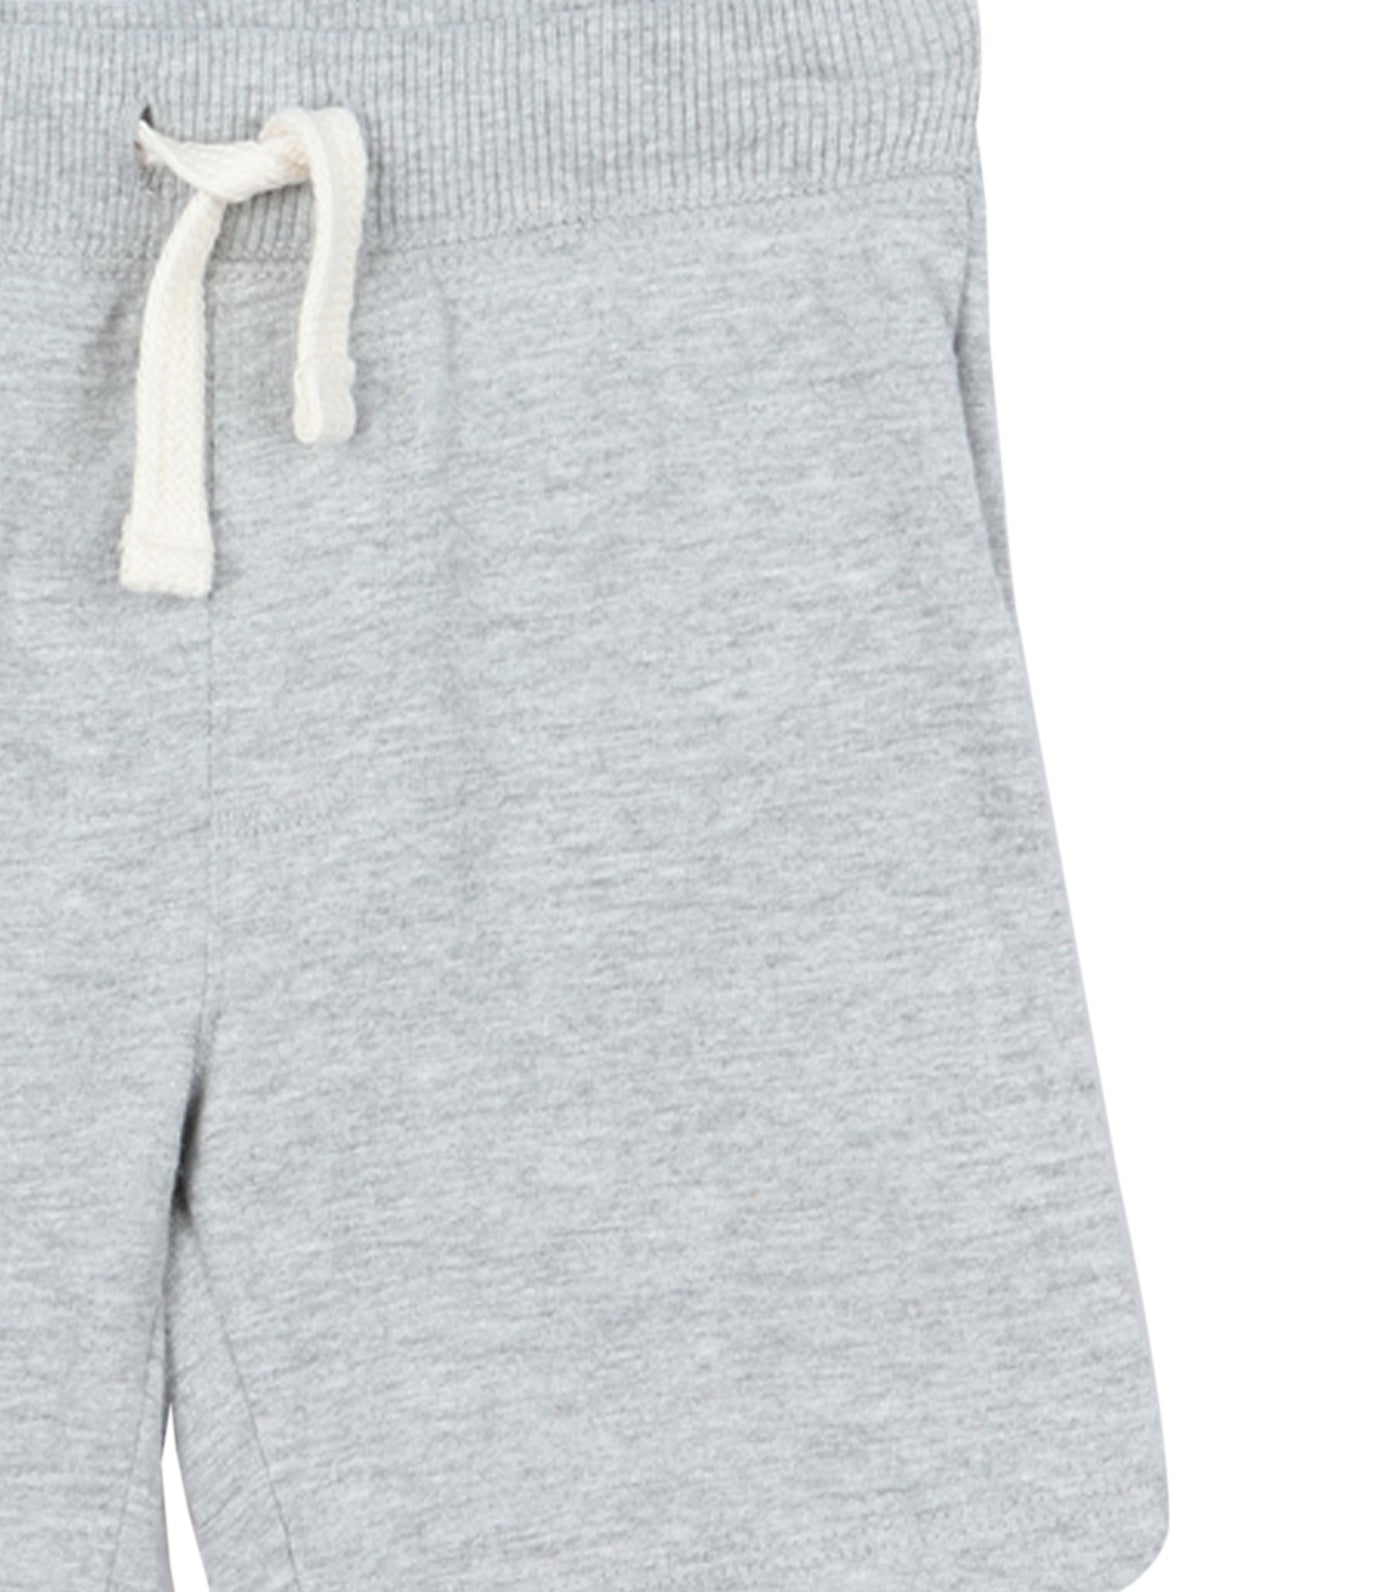 Pull-on Shorts for Toddler Medium Heather Grey